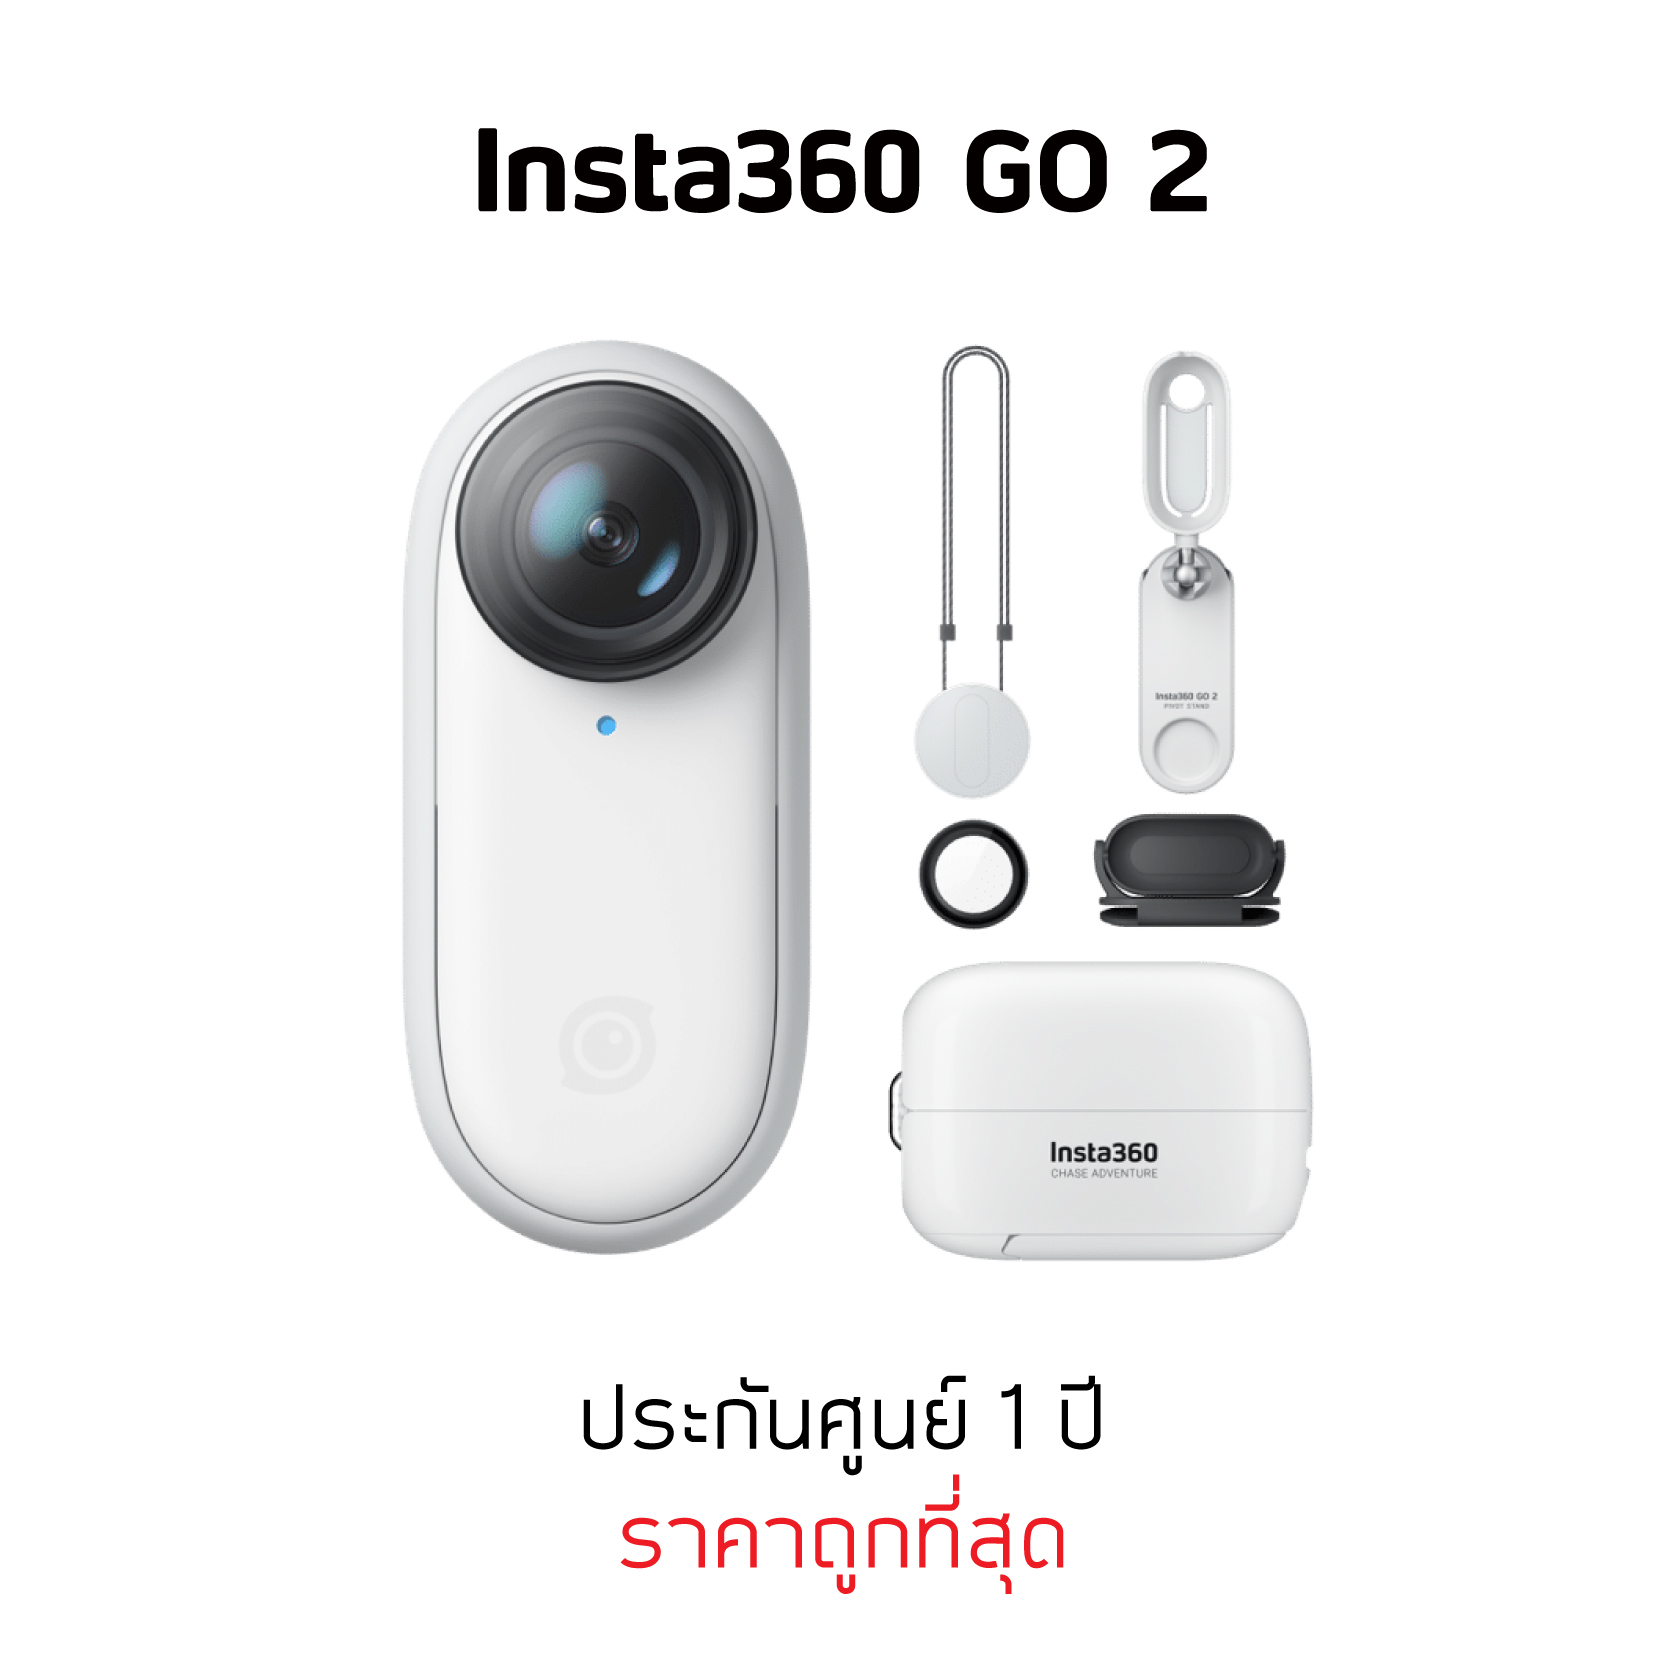 Insta360 GO 2 กล้อง Action Camera ราคาถูกที่สุด ประกันศูนย์ไทย